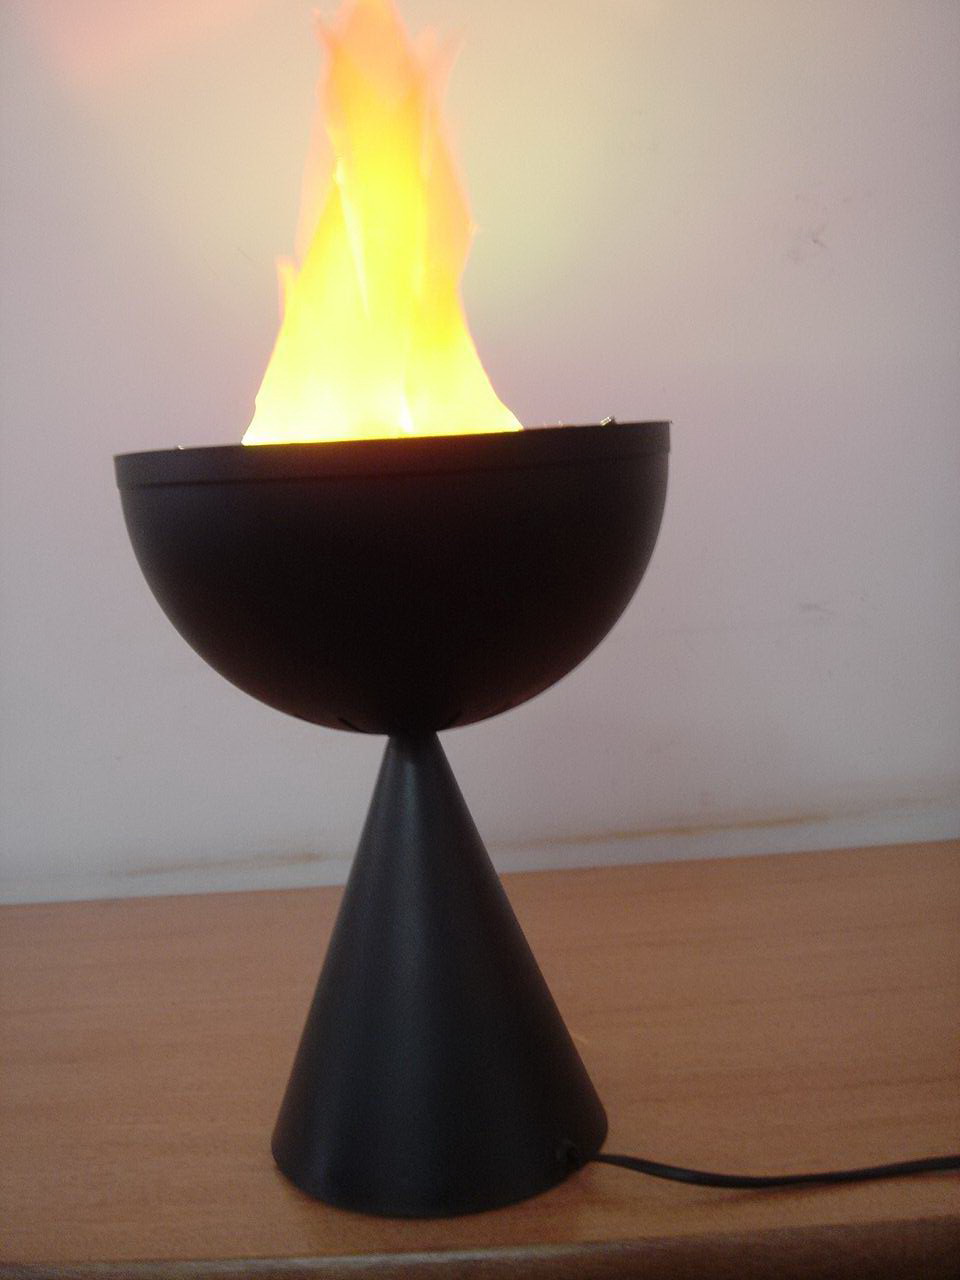 flame lamp photo - 8